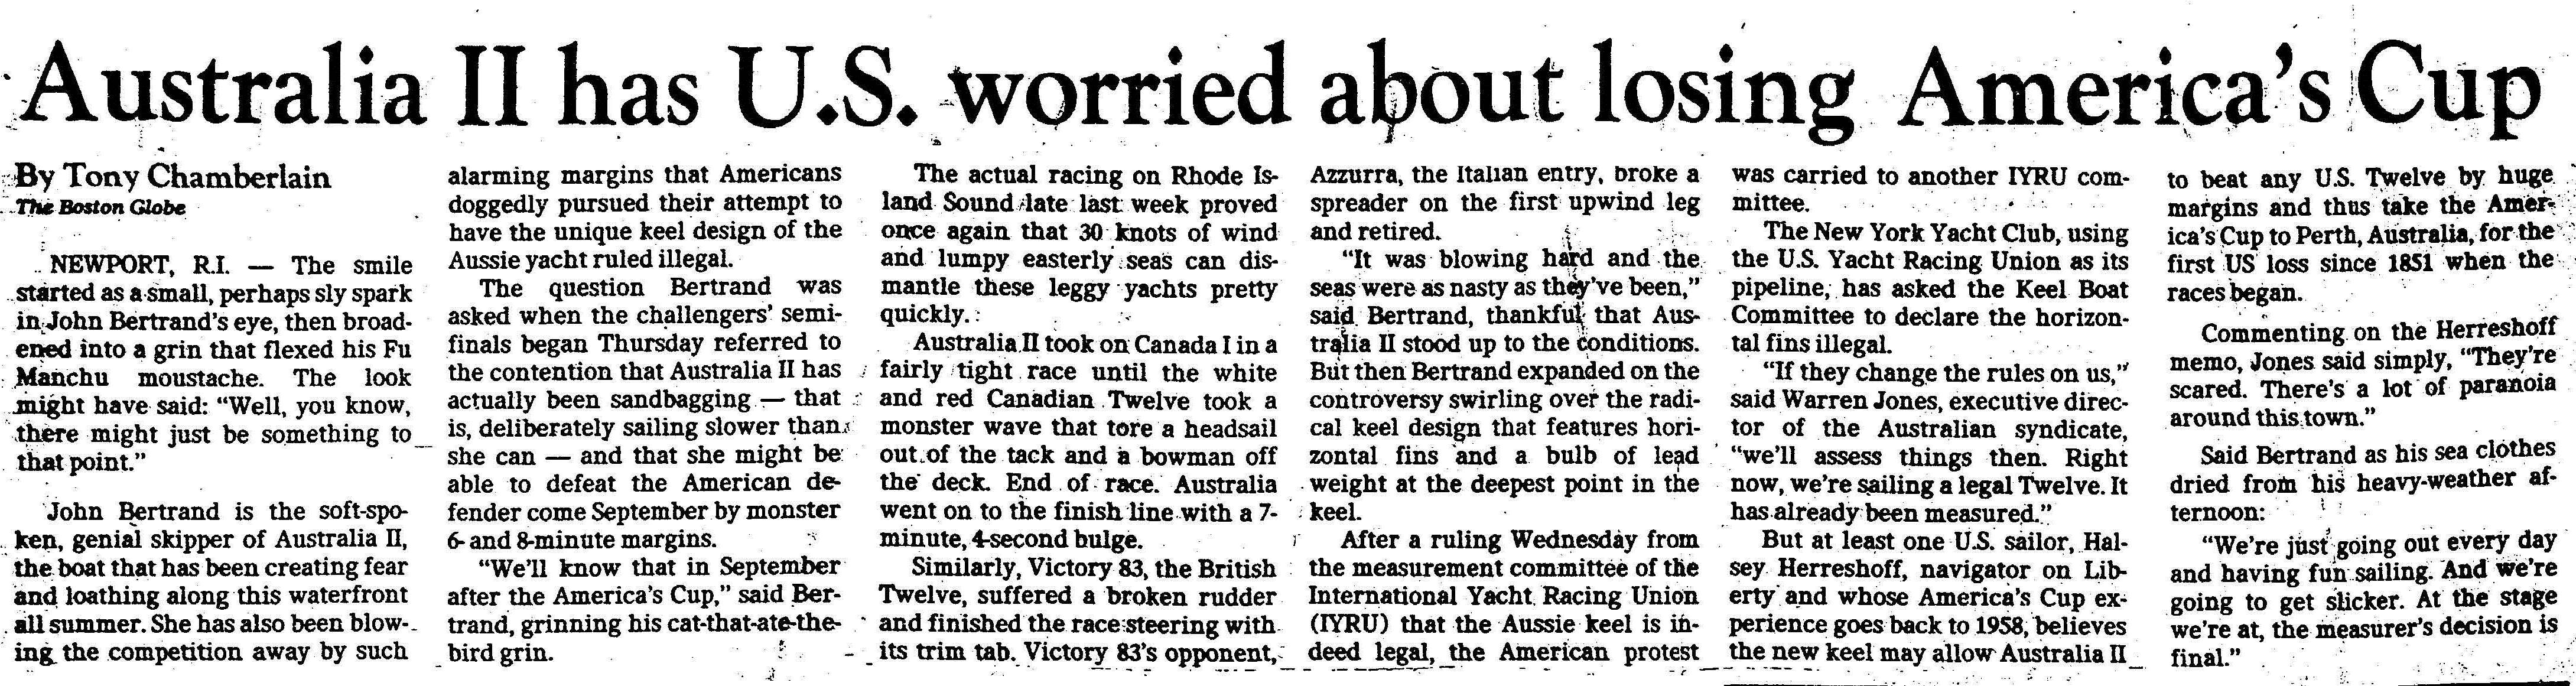 Dallas Morning News, 1983-08-14